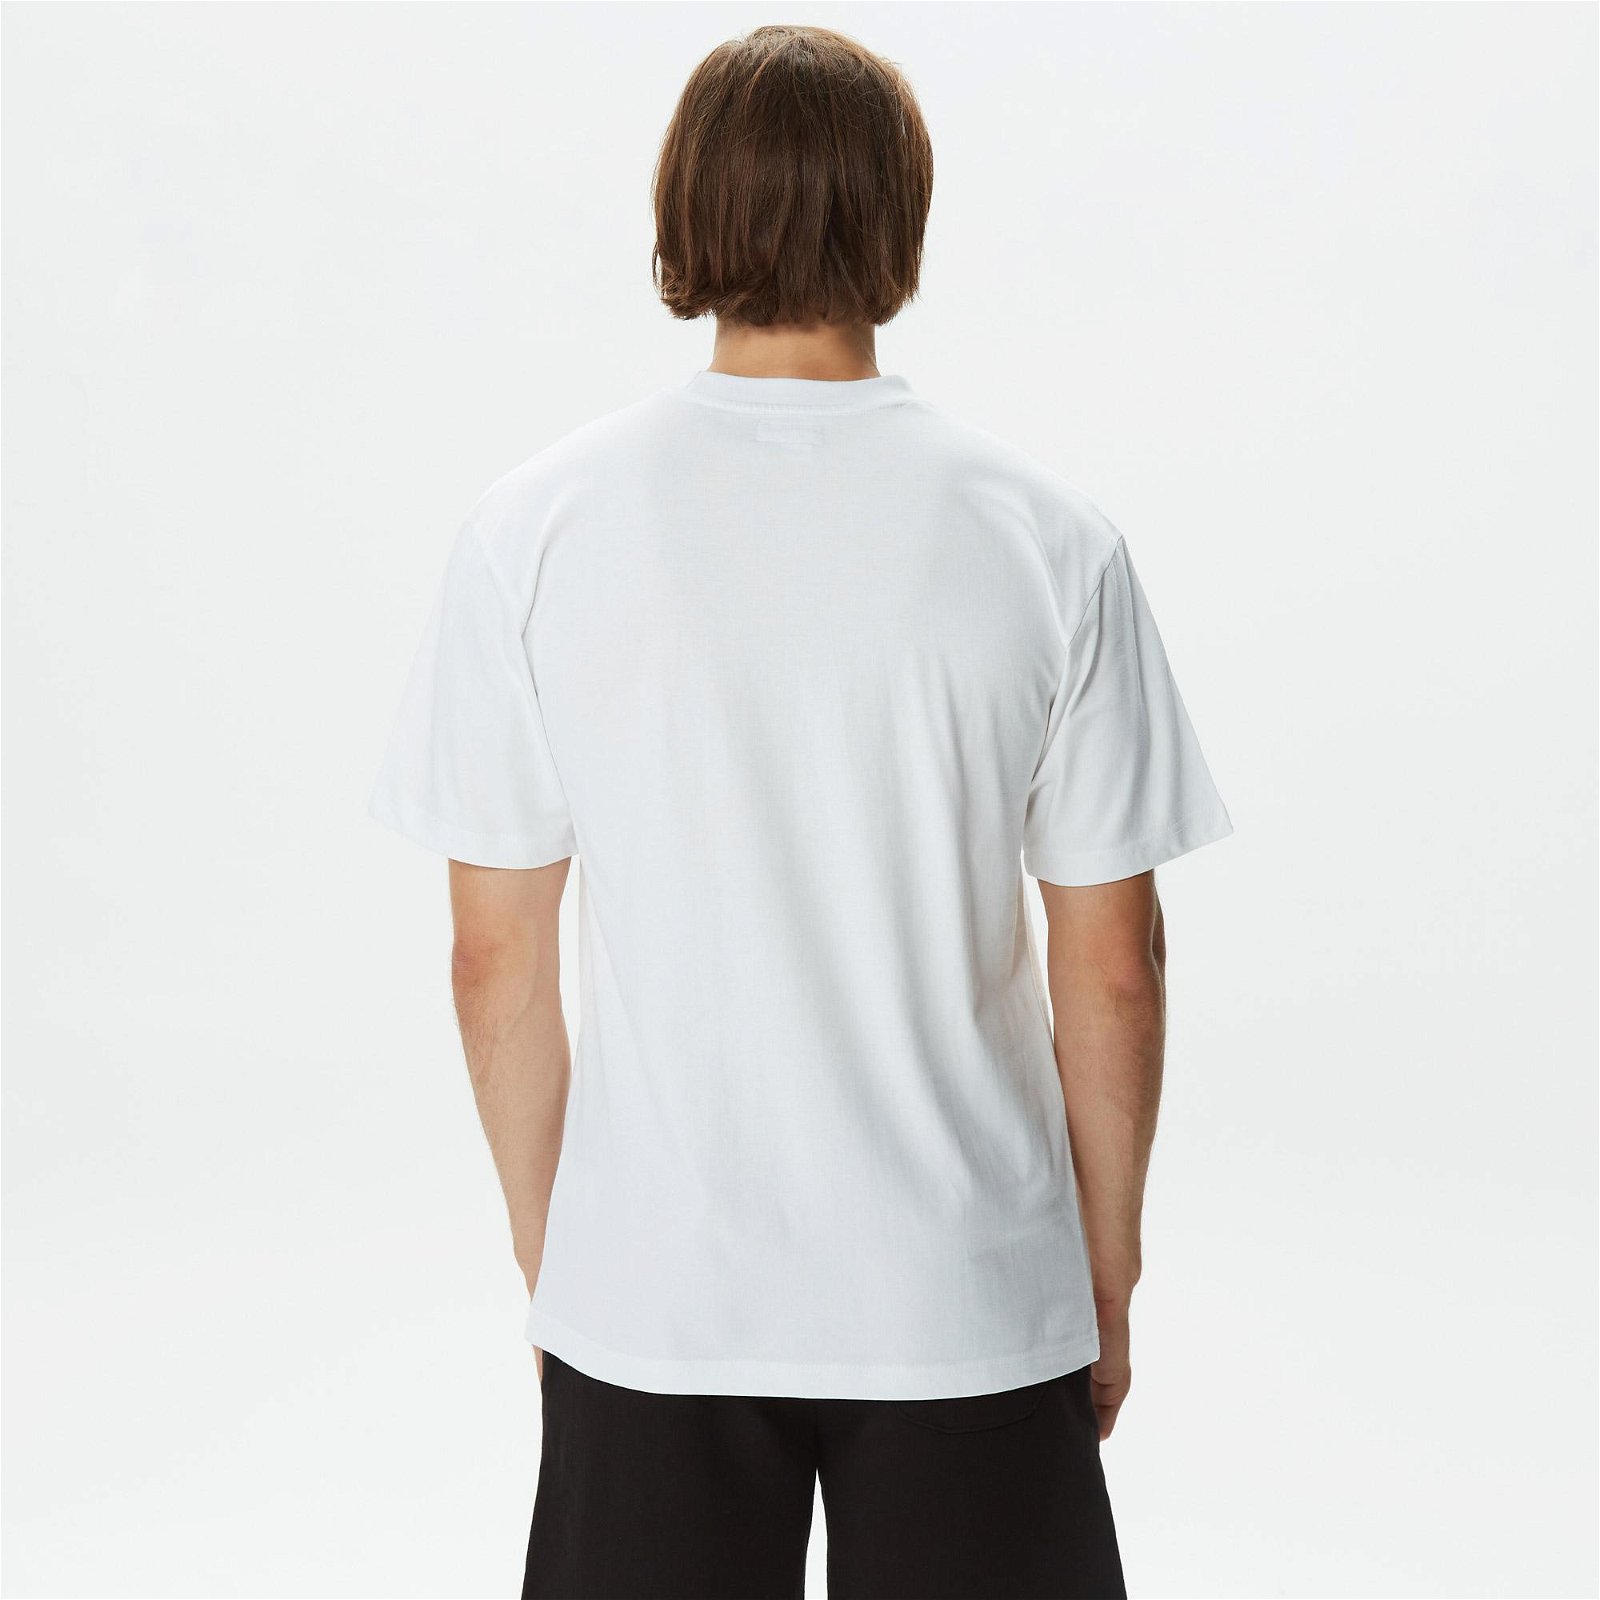 Market Smiley Product Of The Internet Erkek Beyaz T-Shirt